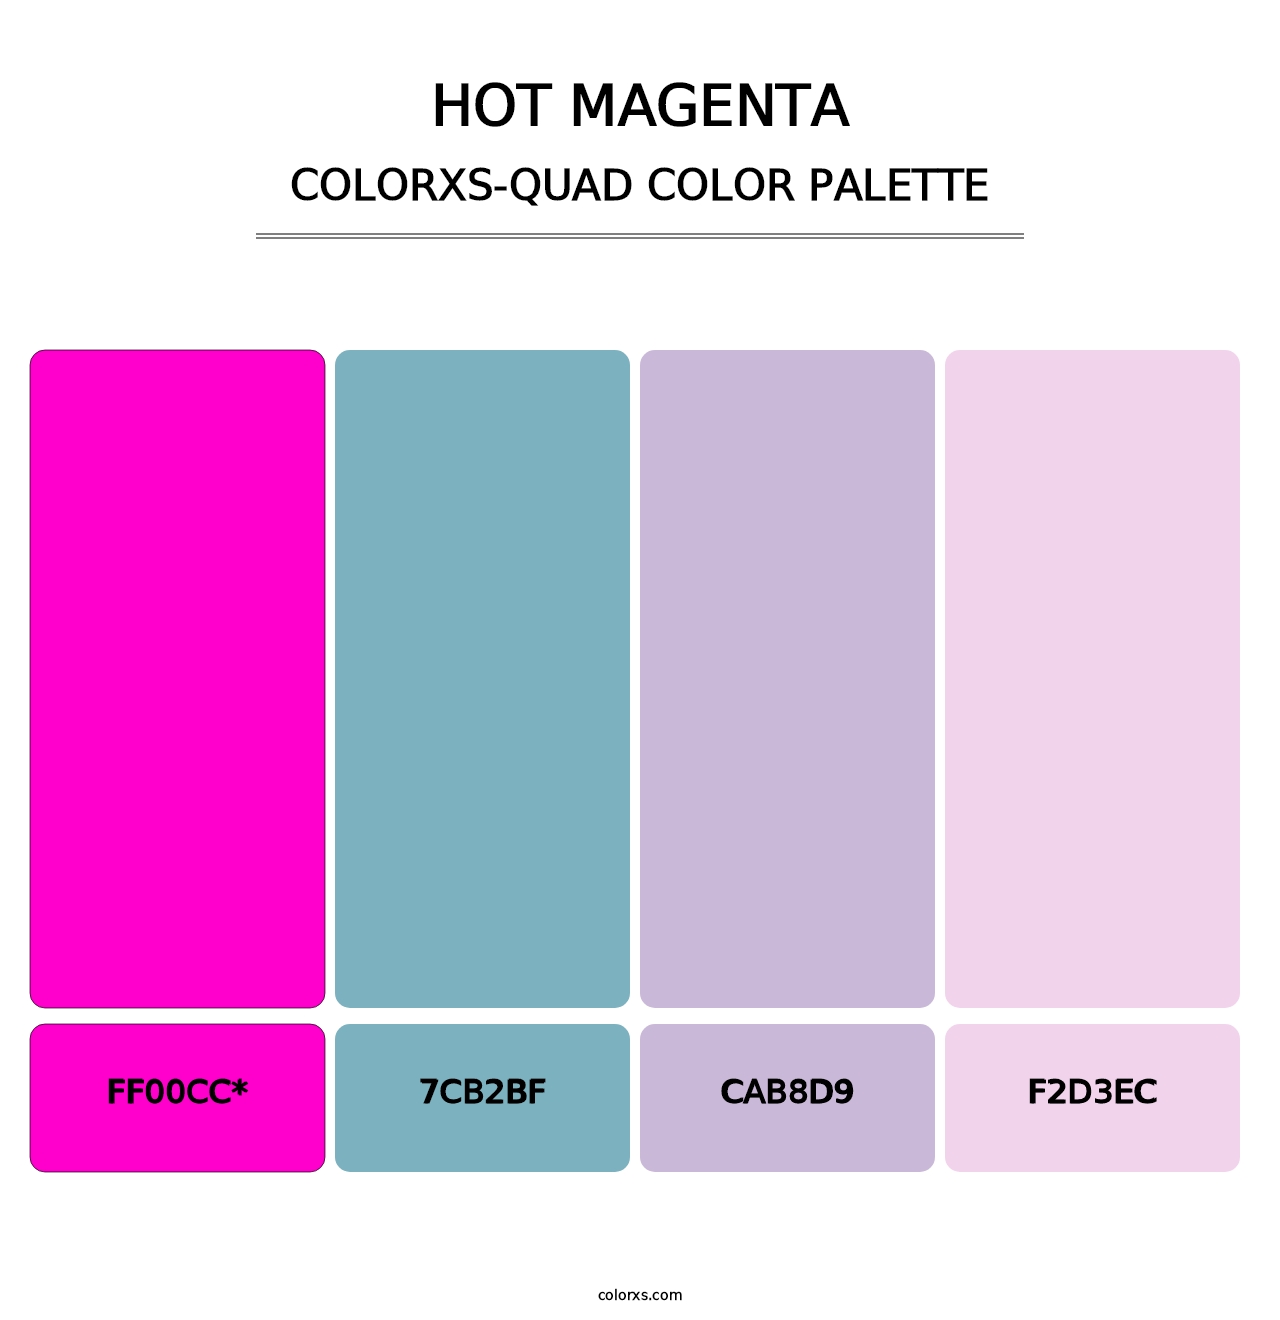 Hot Magenta - Colorxs Quad Palette